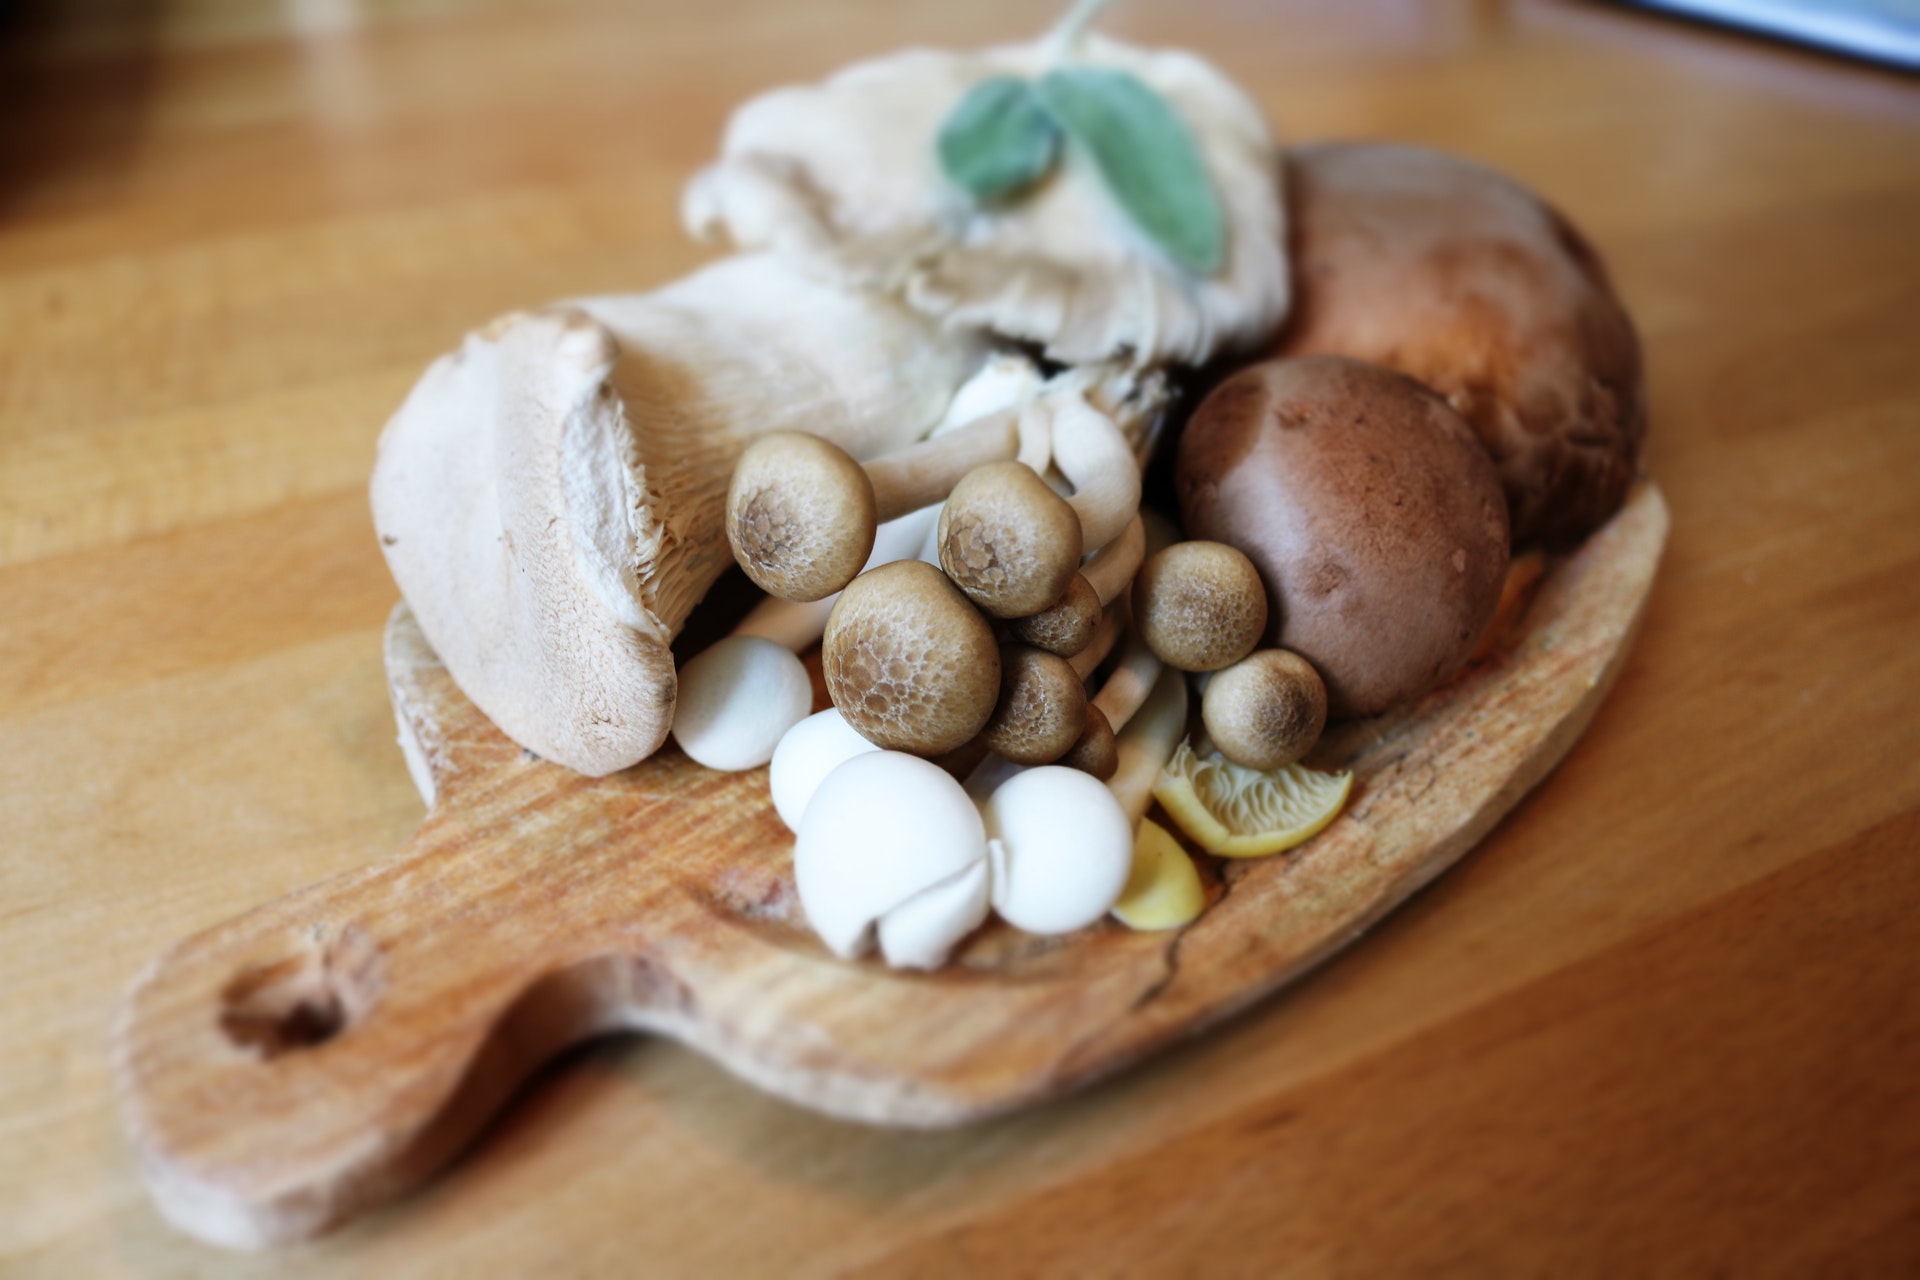 Unusual salad recipe with mushrooms